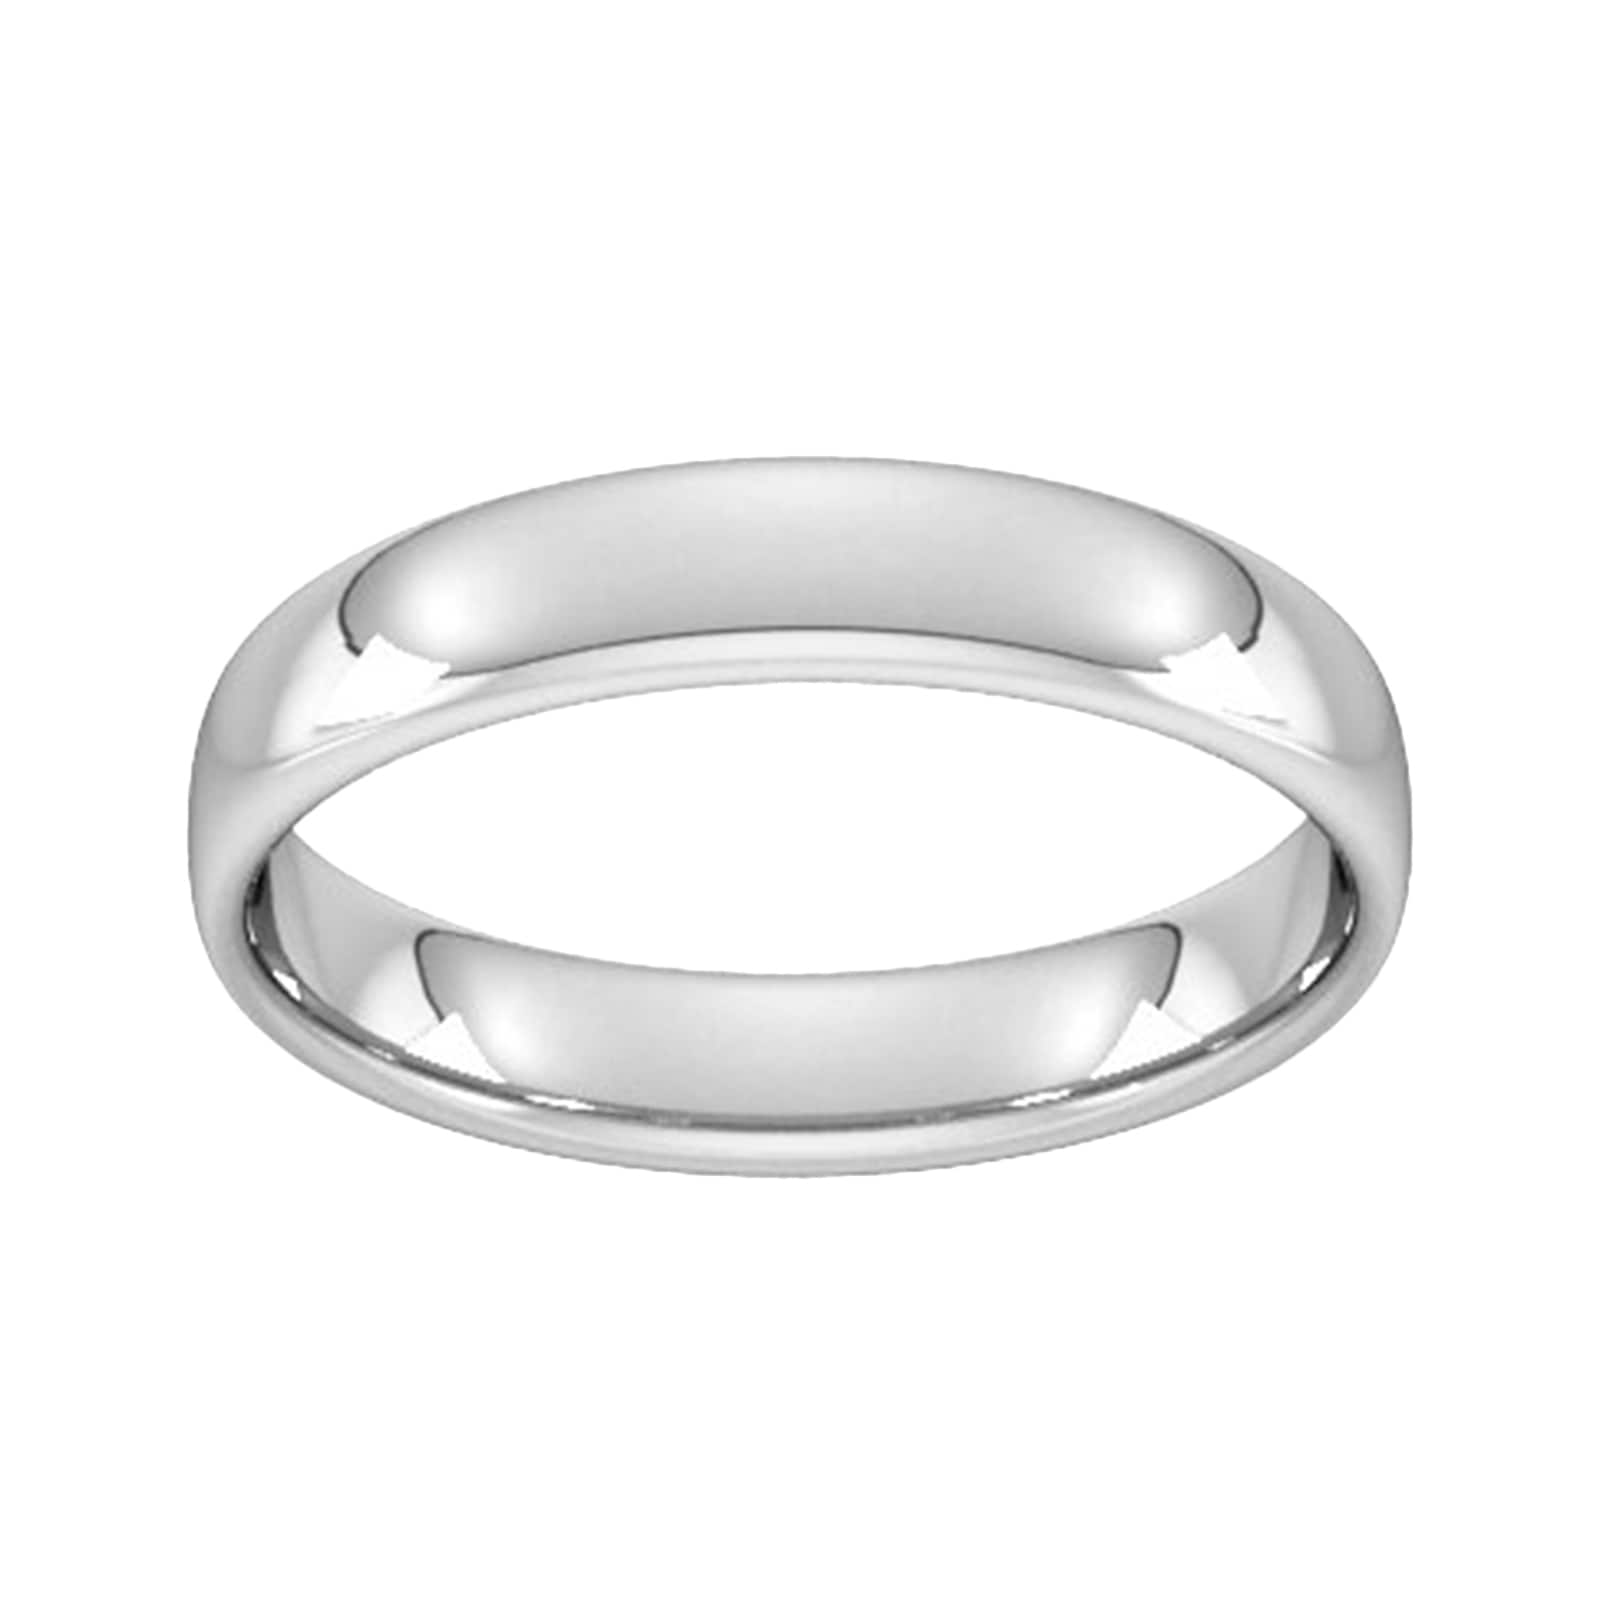 4mm Slight Court Standard Wedding Ring In 9 Carat White Gold - Ring Size Q